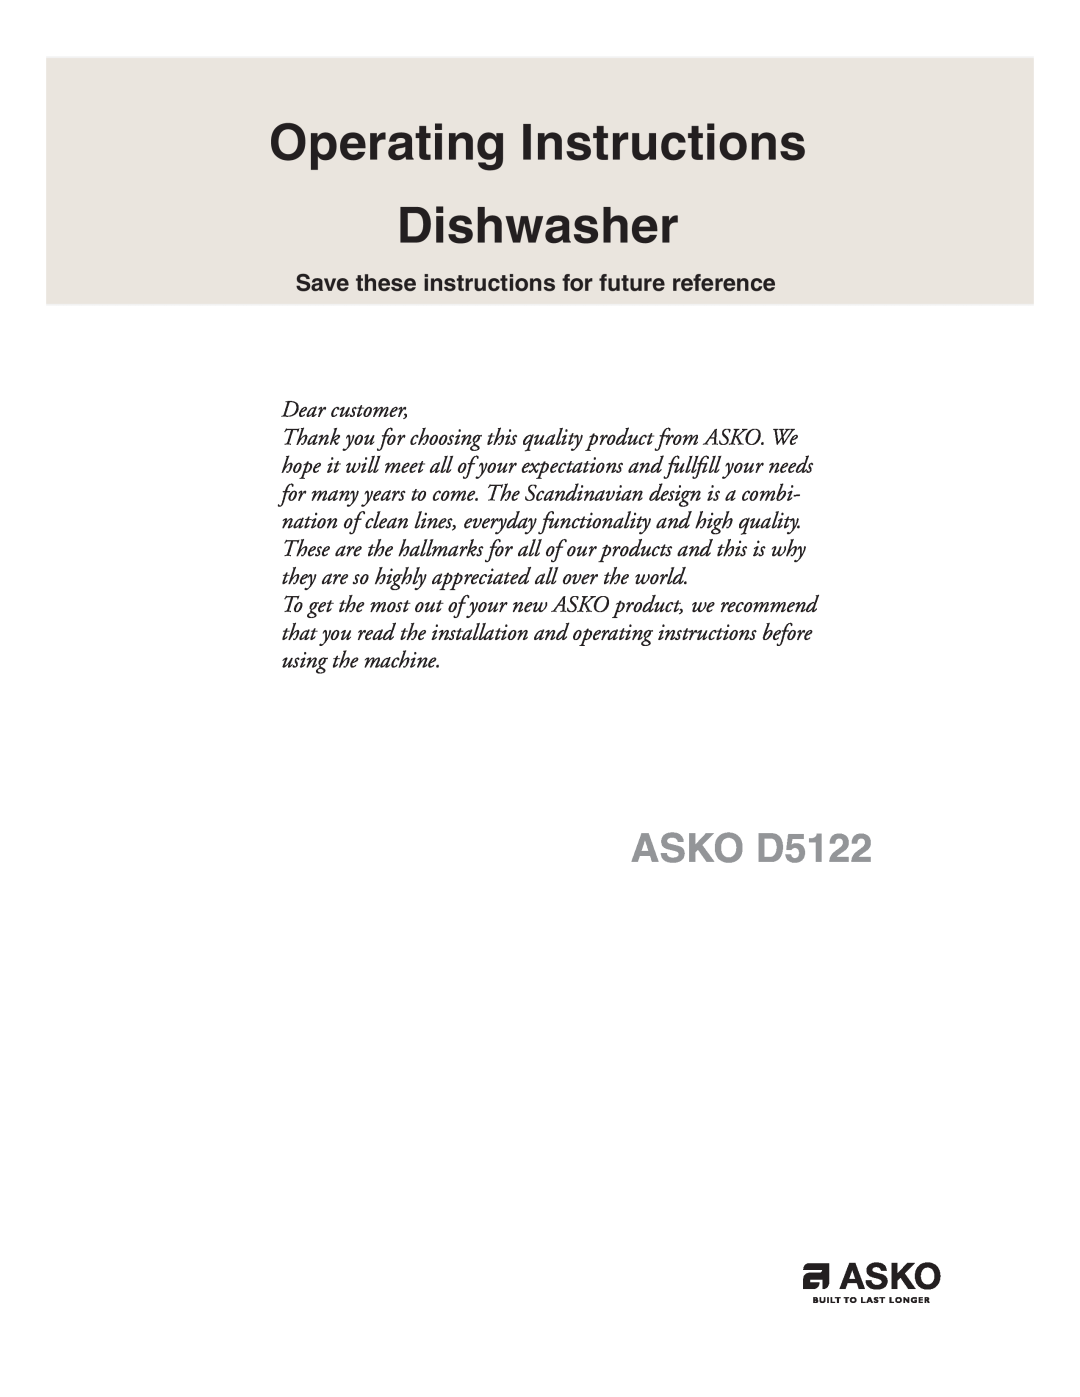 Asko operating instructions Operating Instructions Dishwasher, ASKO D5122, Dear customer 